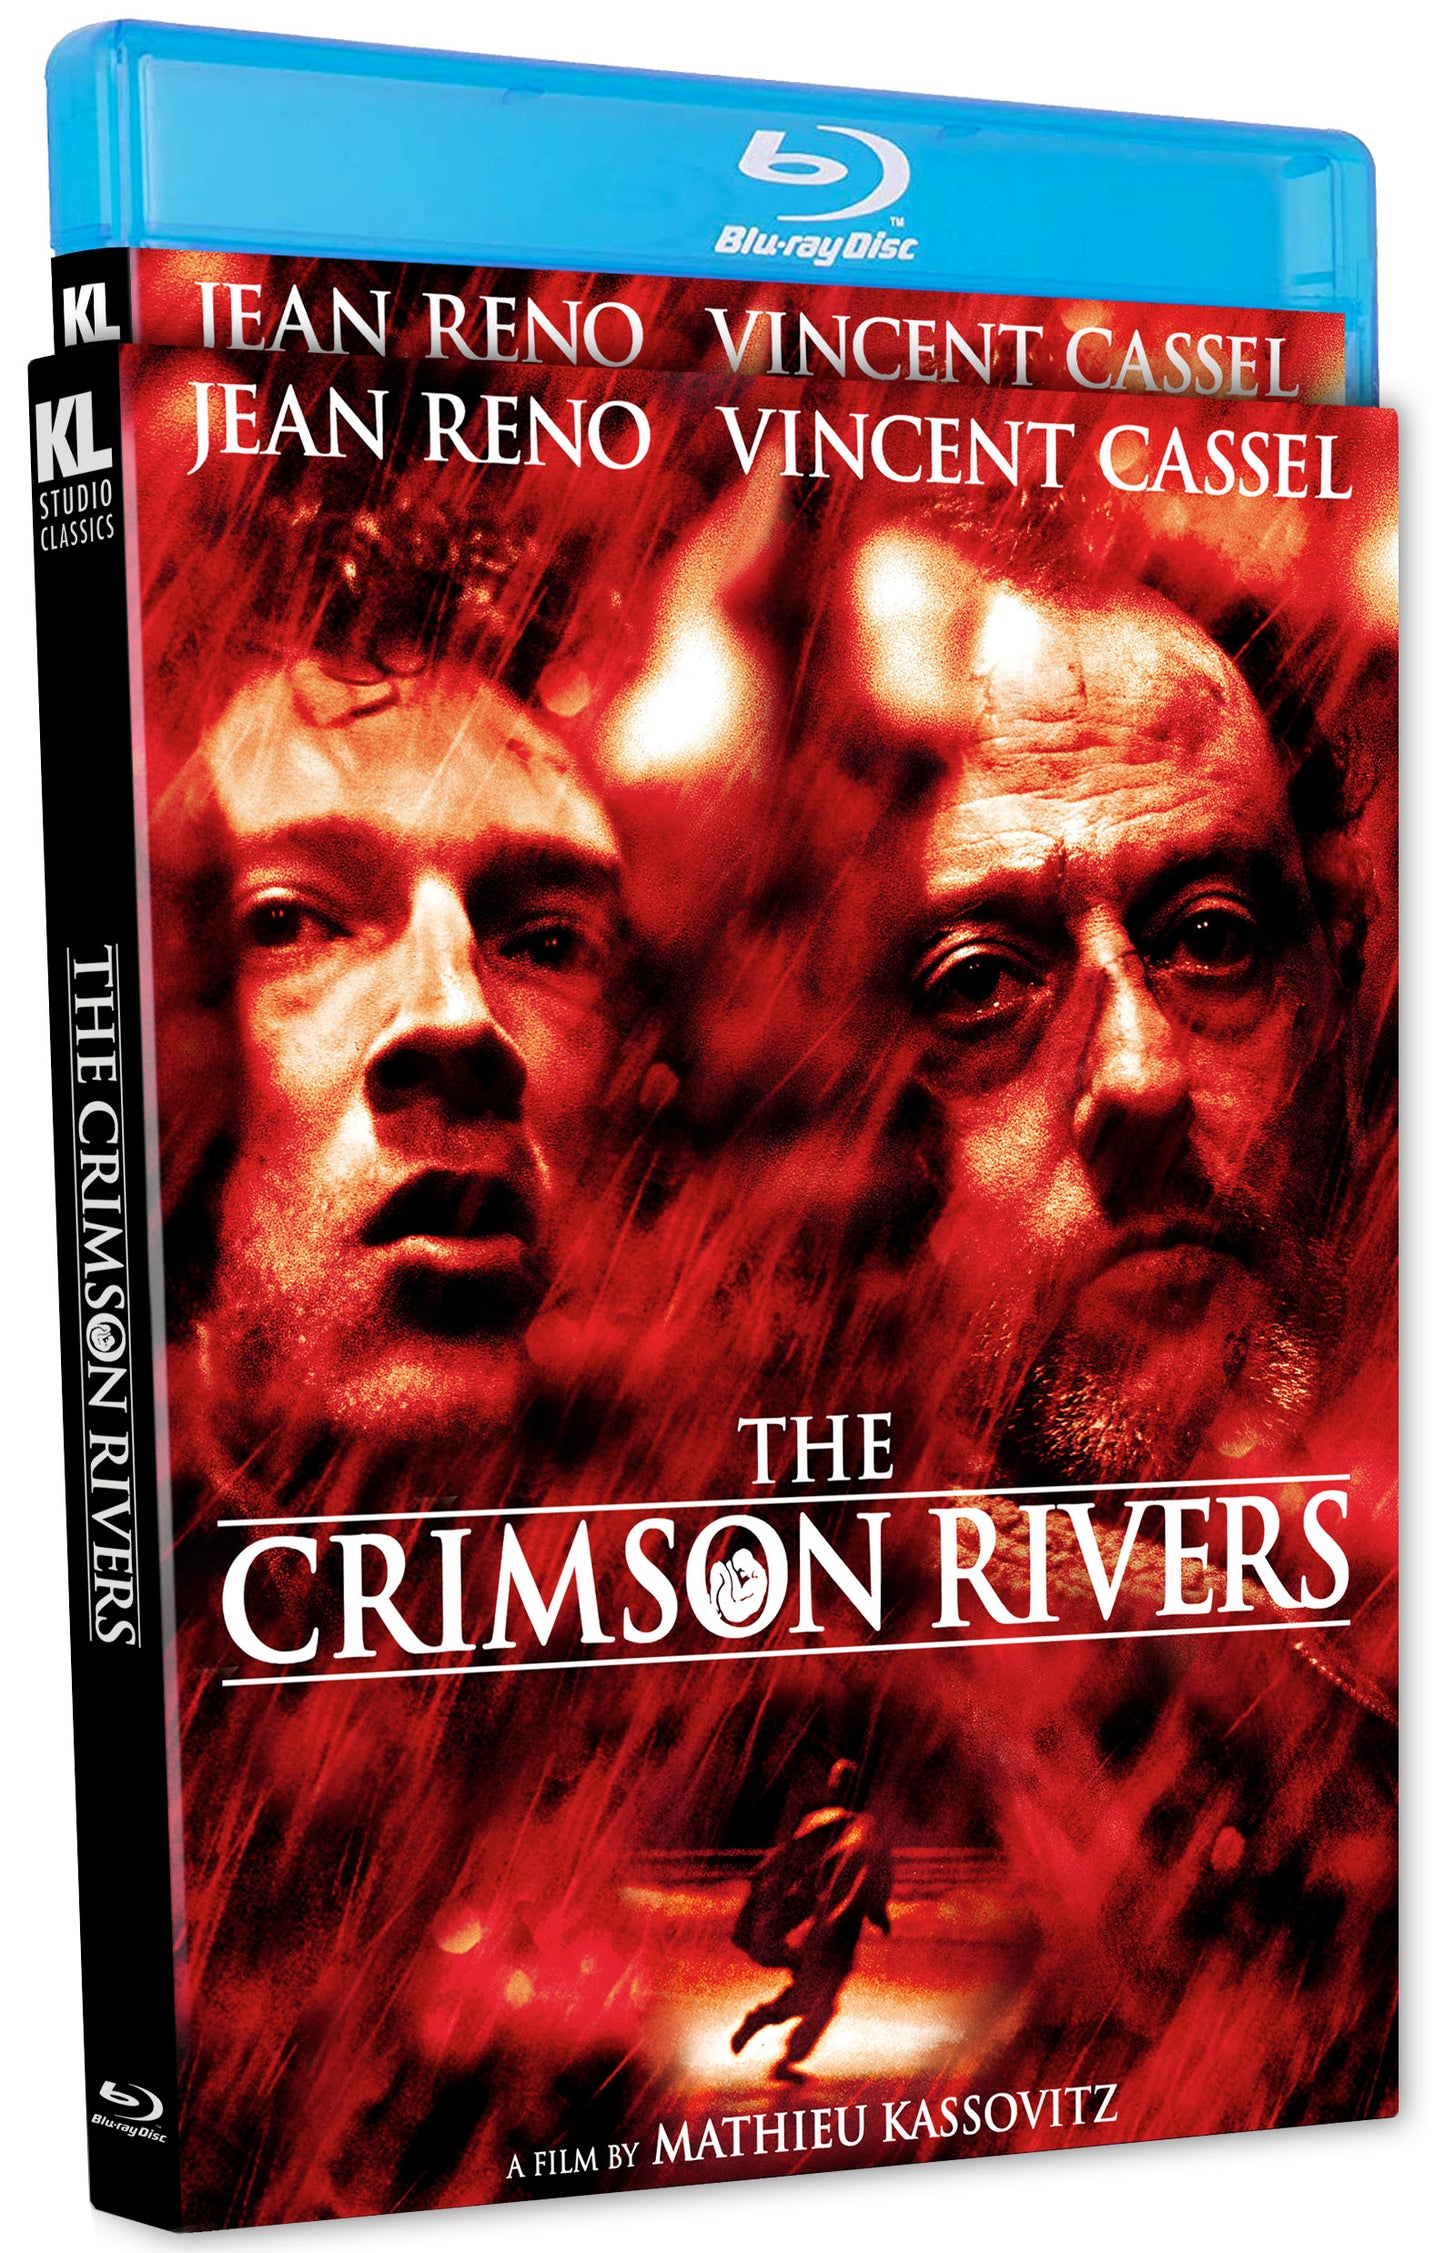 The Crimson Rivers Kino Lorber Blu-Ray [NEW] [SLIPCOVER]